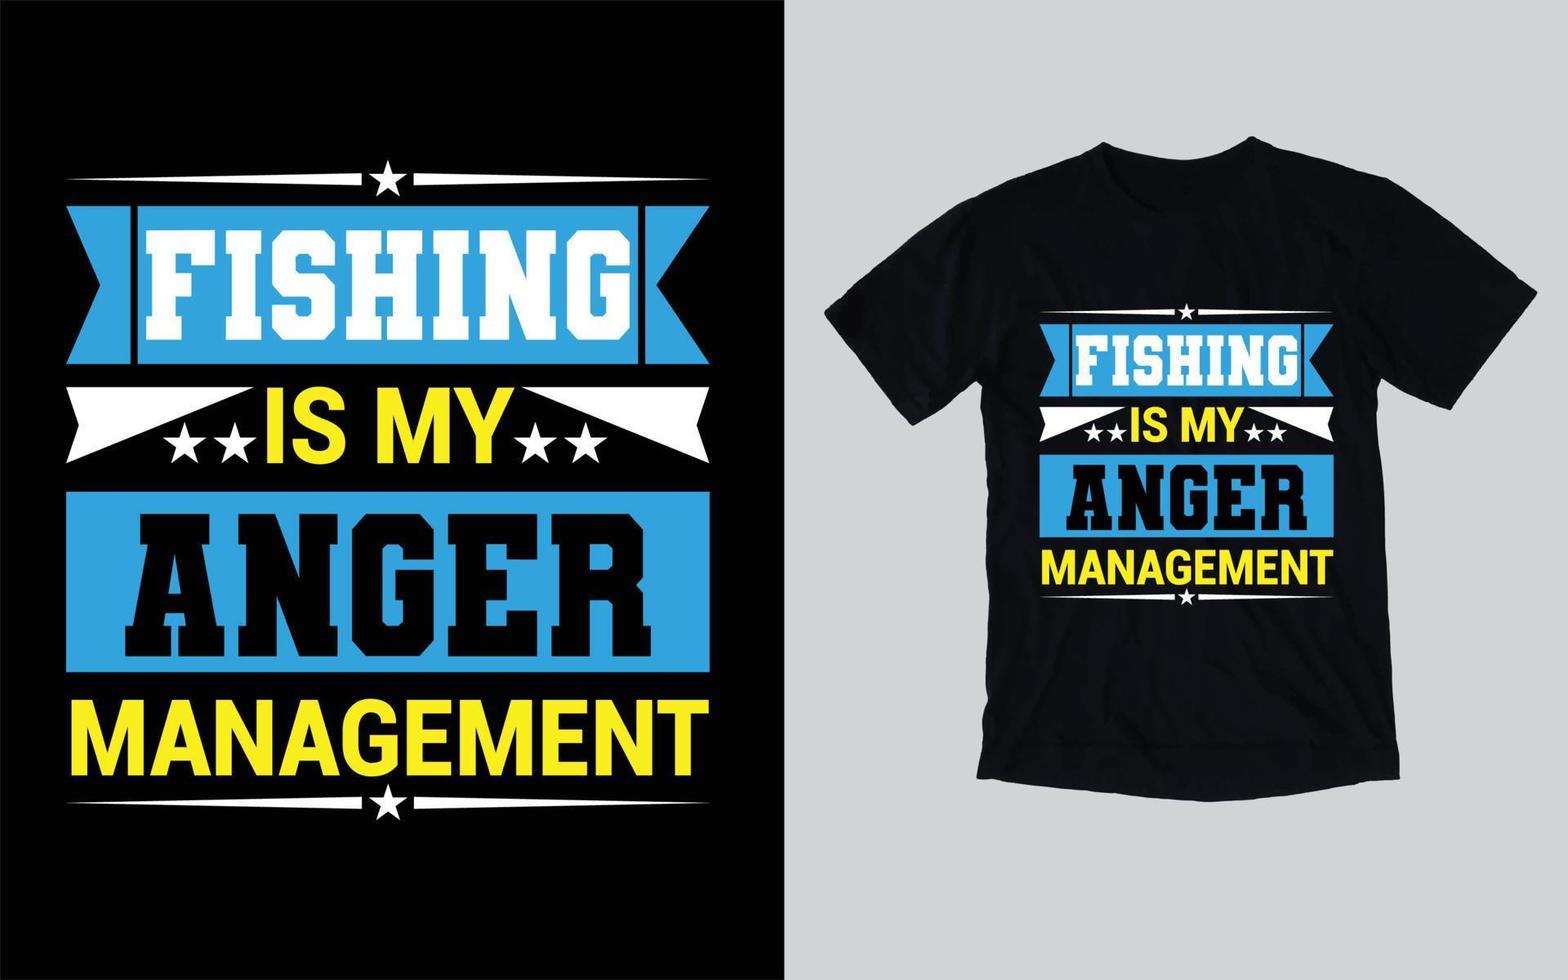 visvangst typografie t-shirt ontwerp, visvangst t-shirt ontwerp, vector